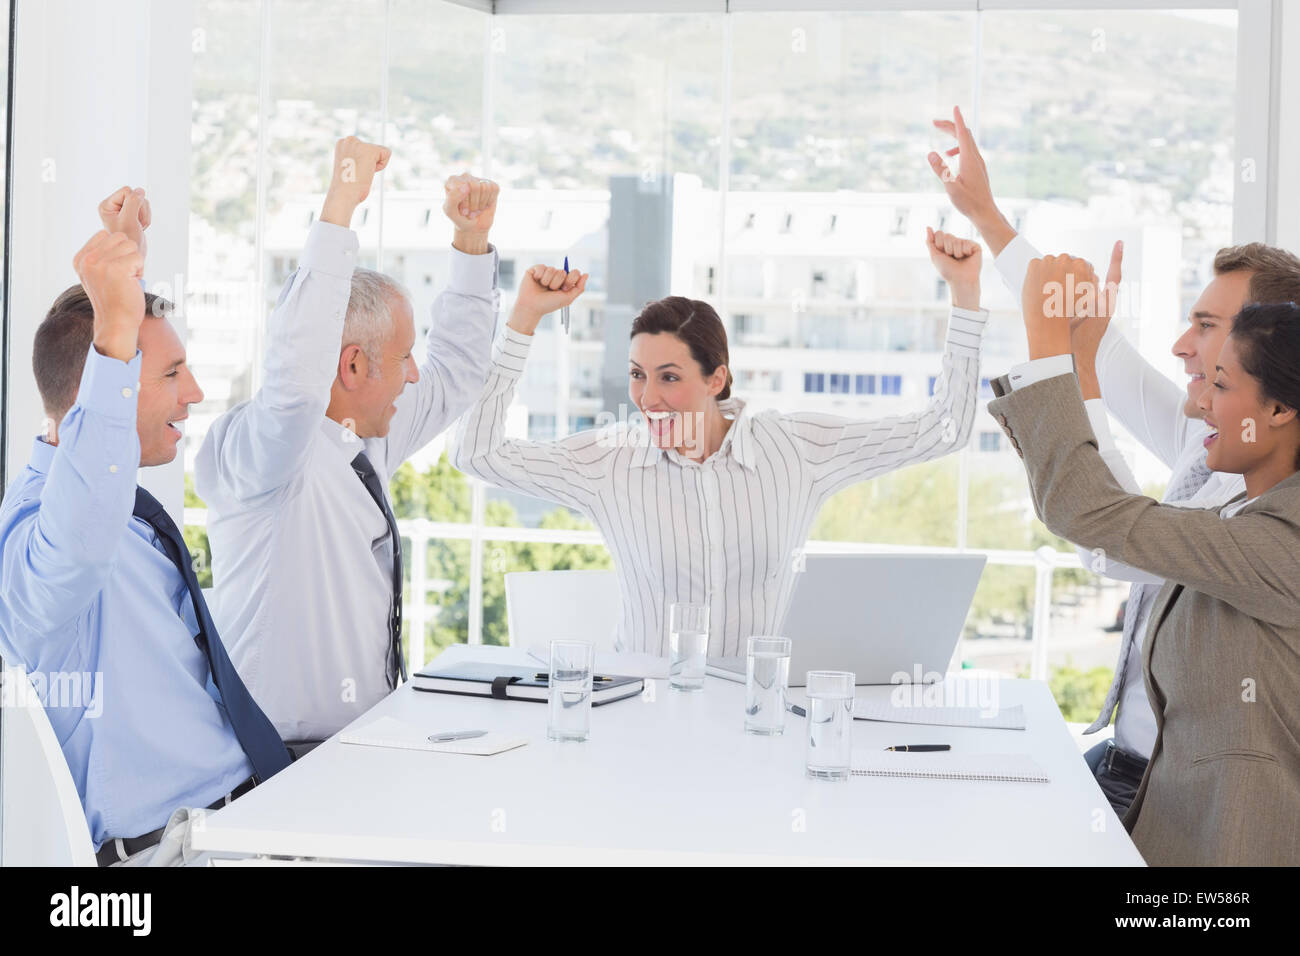 Business team celebrating a good job Stock Photo